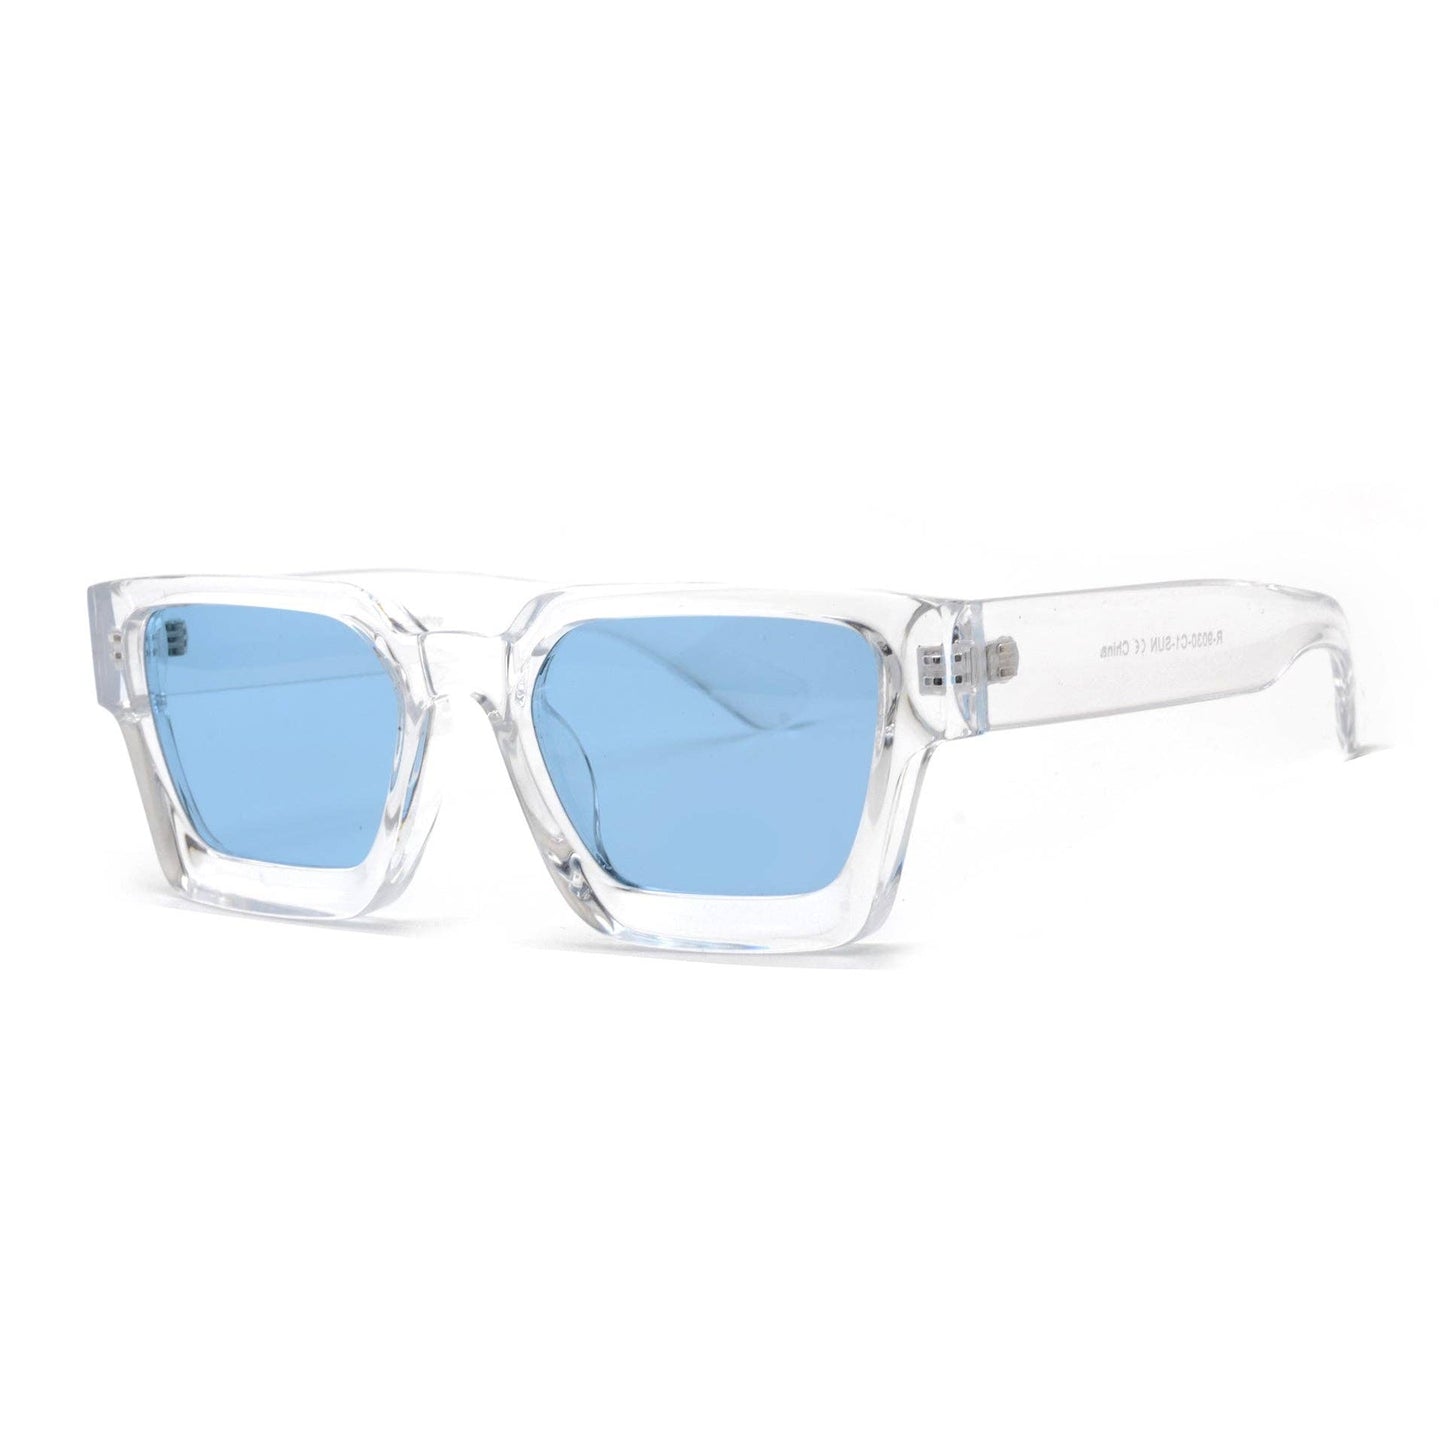 Ryan Simkhai Eyeshop - ZION | Clear / Blue Lens | Polarized Sunglasses